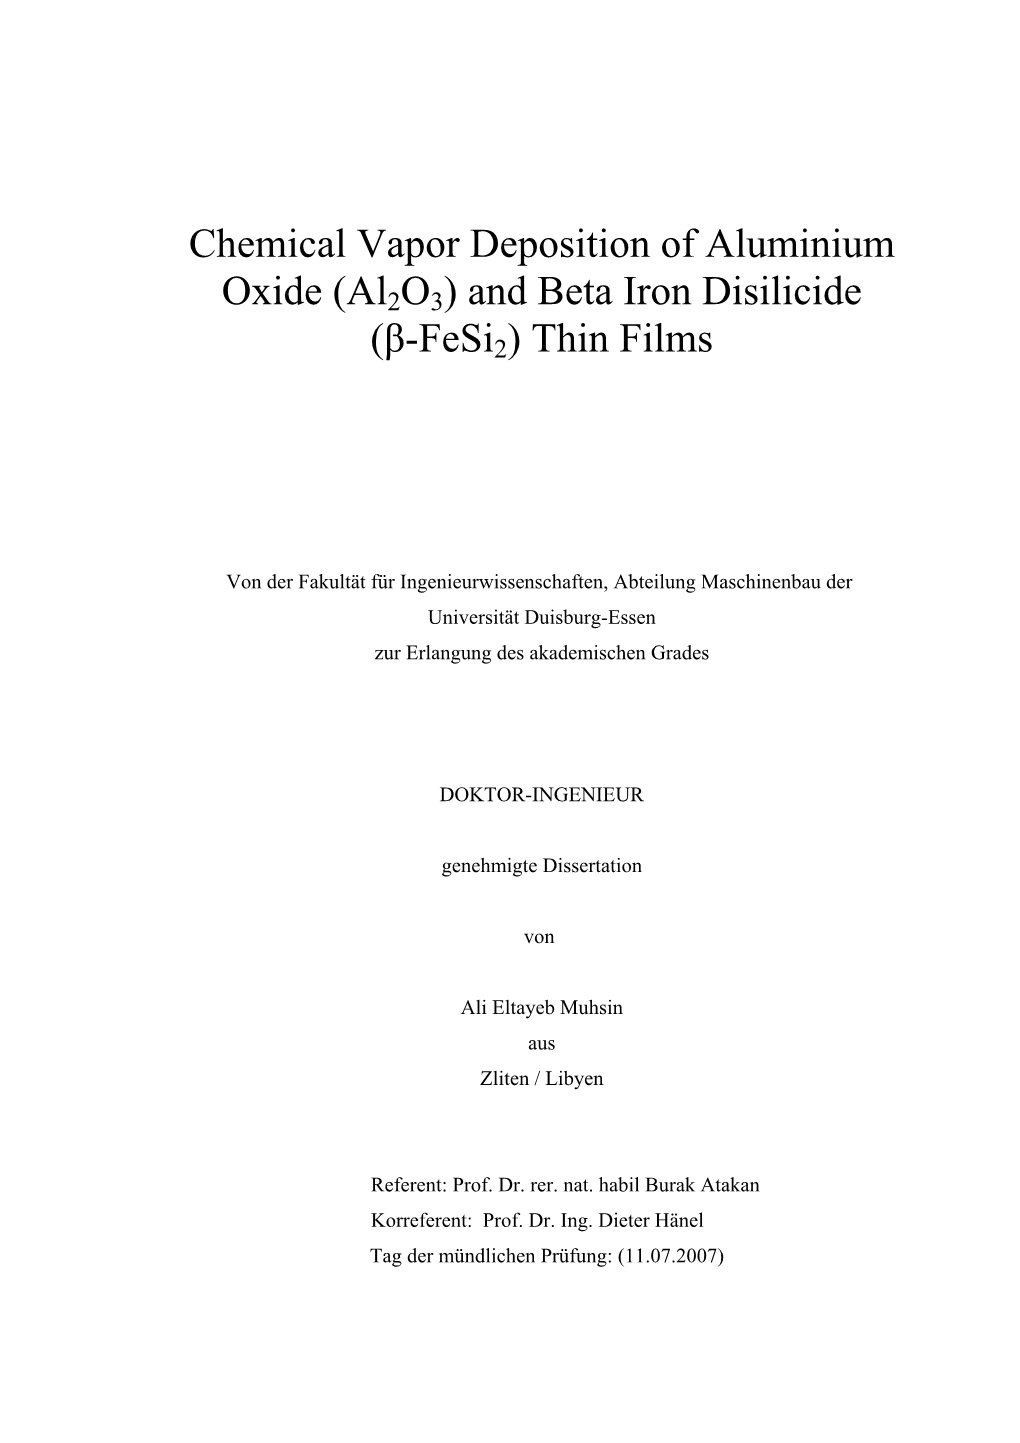 Chemical Vapor Deposition of Aluminium Oxide (Al2o3) and Beta Iron Disilicide (Β-Fesi2) Thin Films